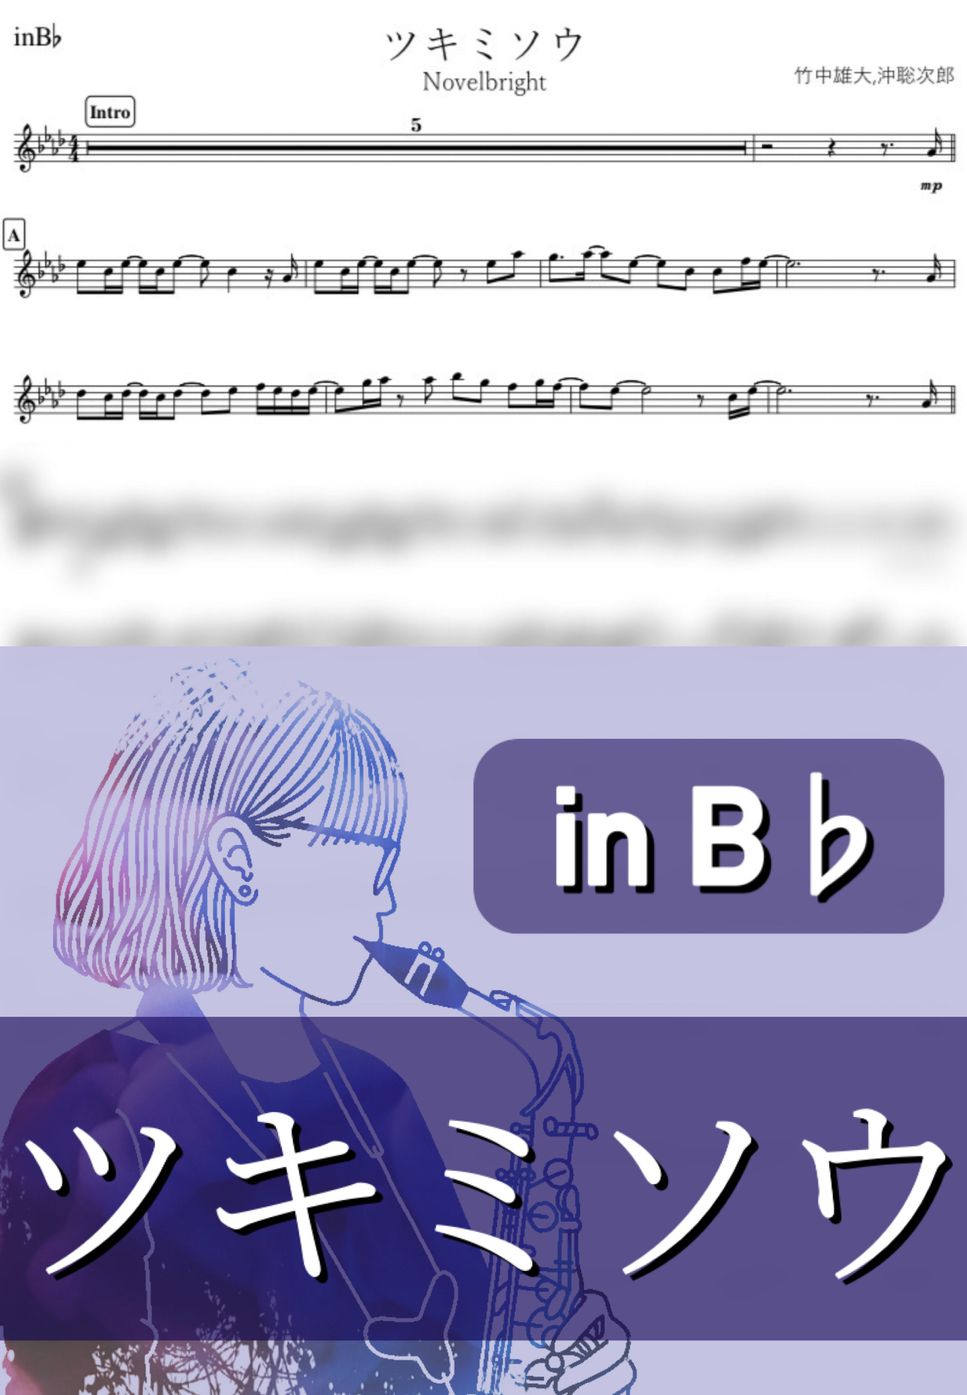 Novelbright - ツキミソウ (B♭) by kanamusic